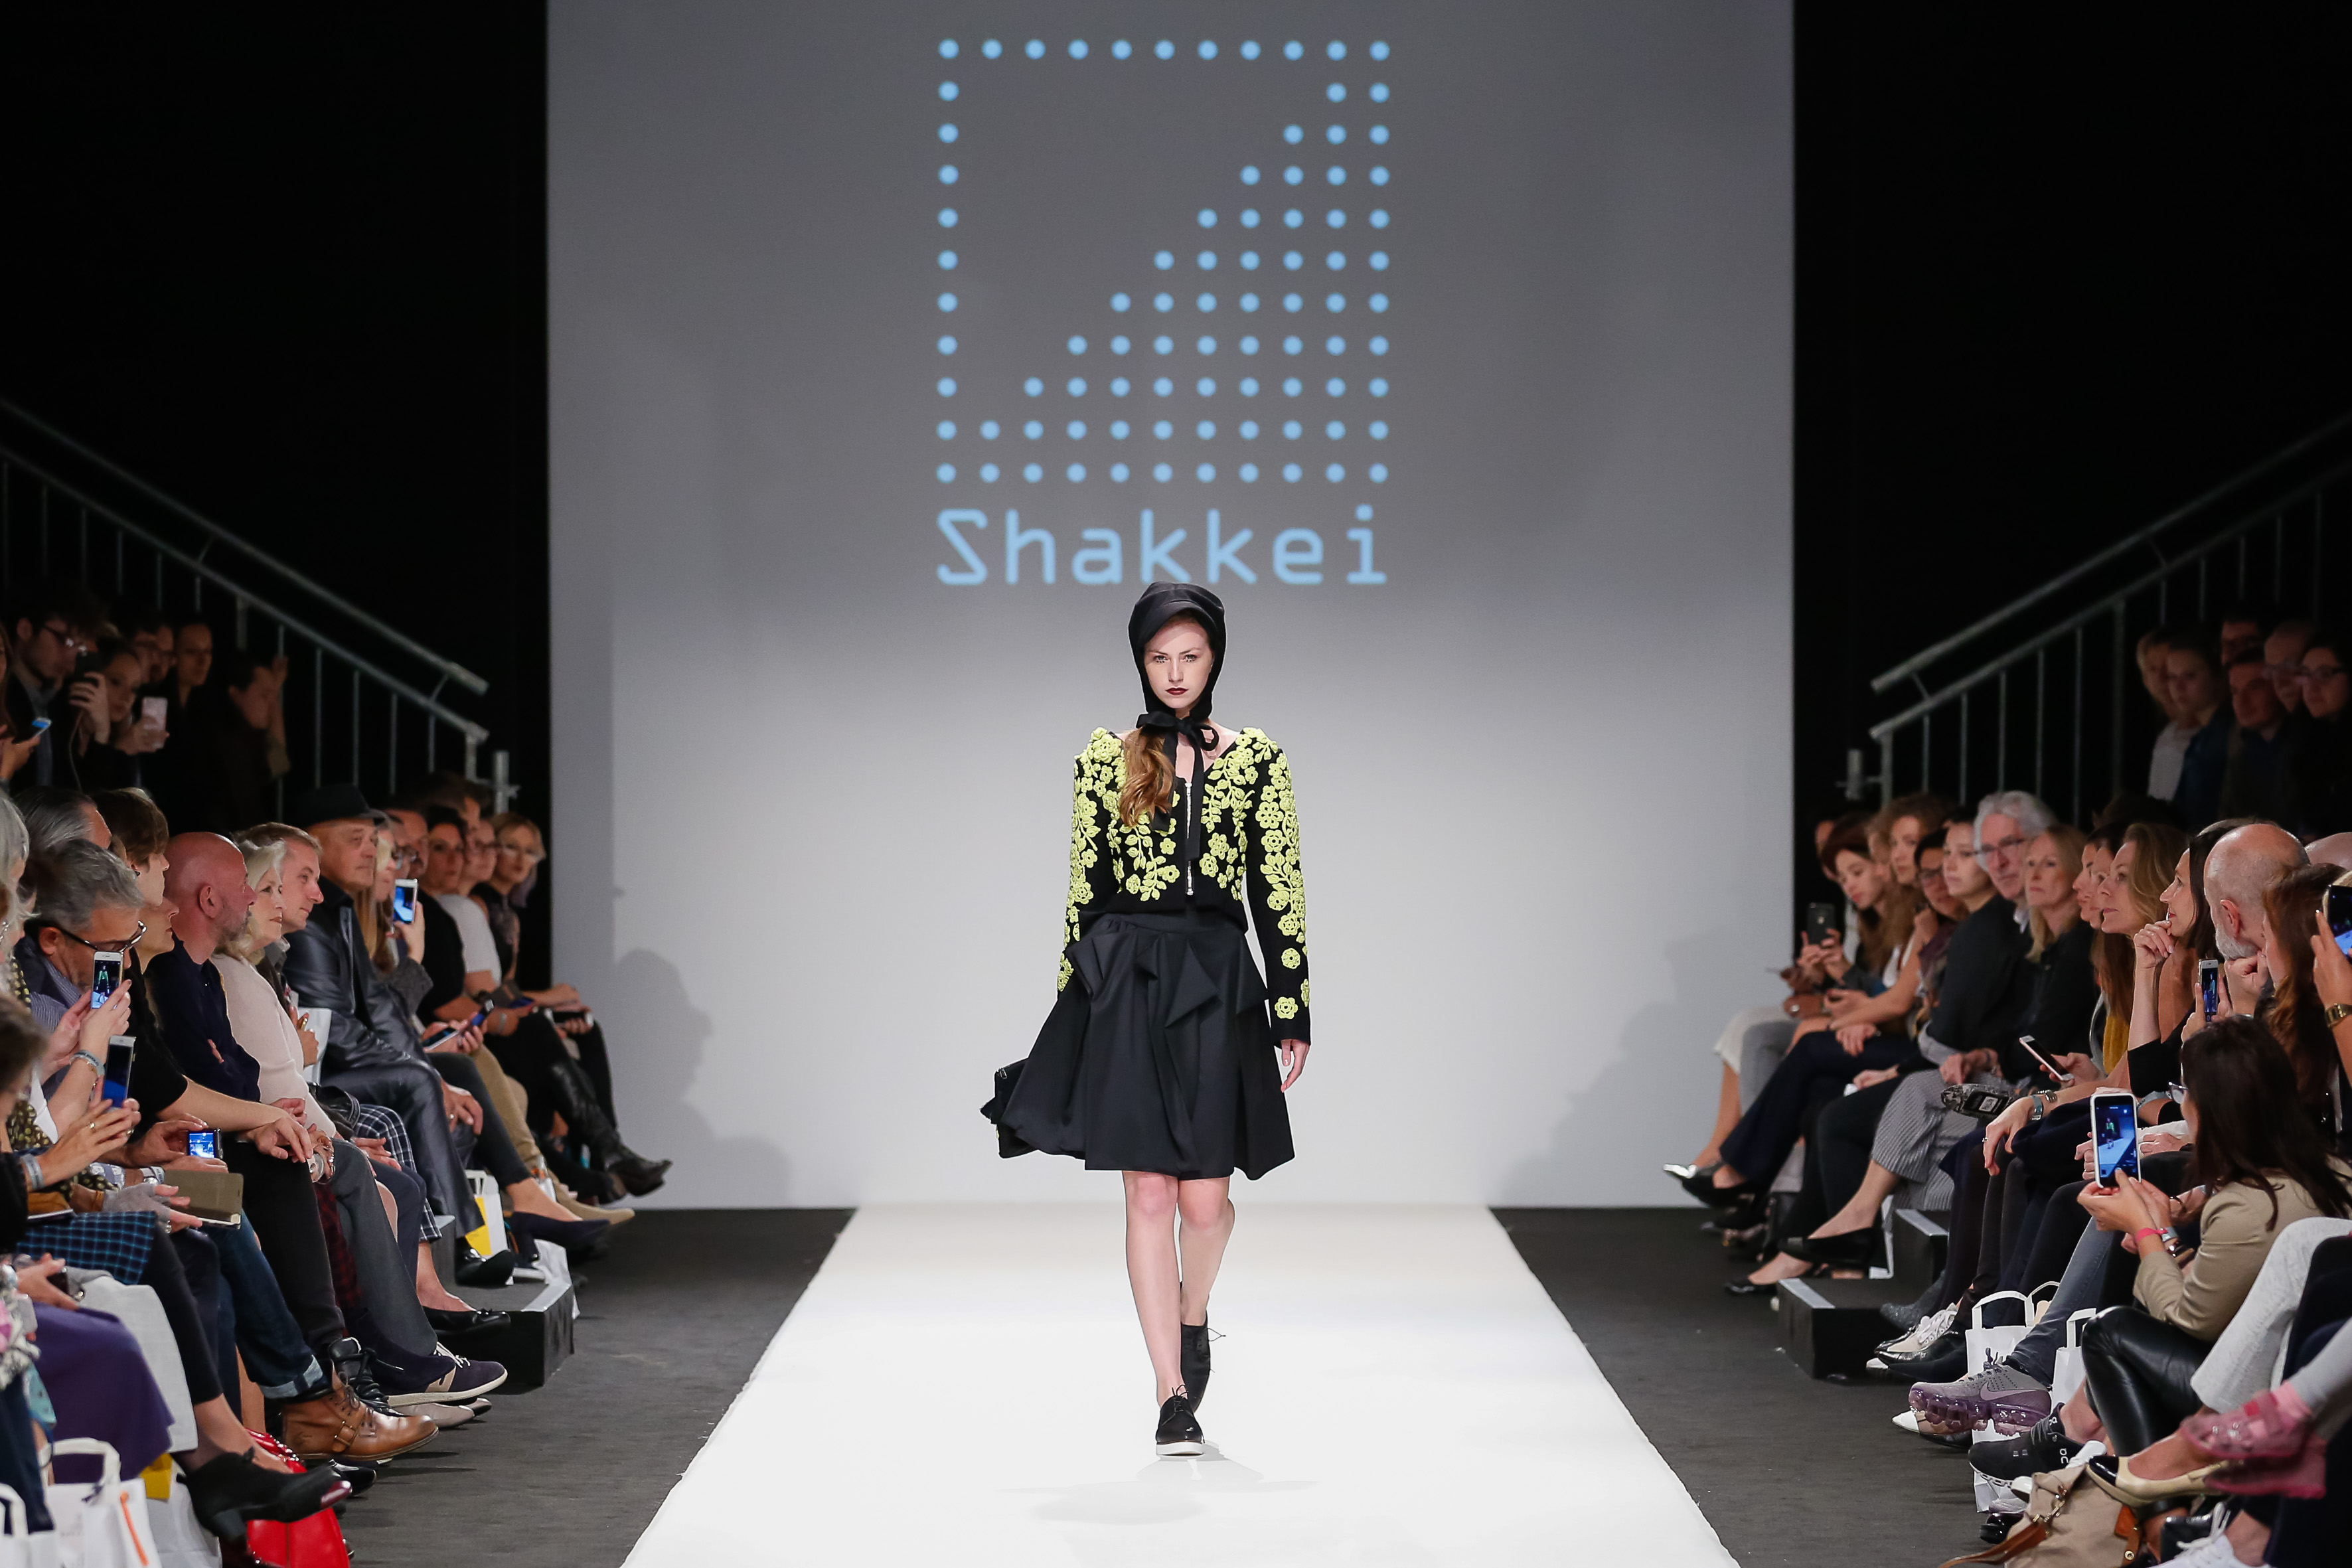 Shakkei Vienna Fashion Festival by Thomas Lerch